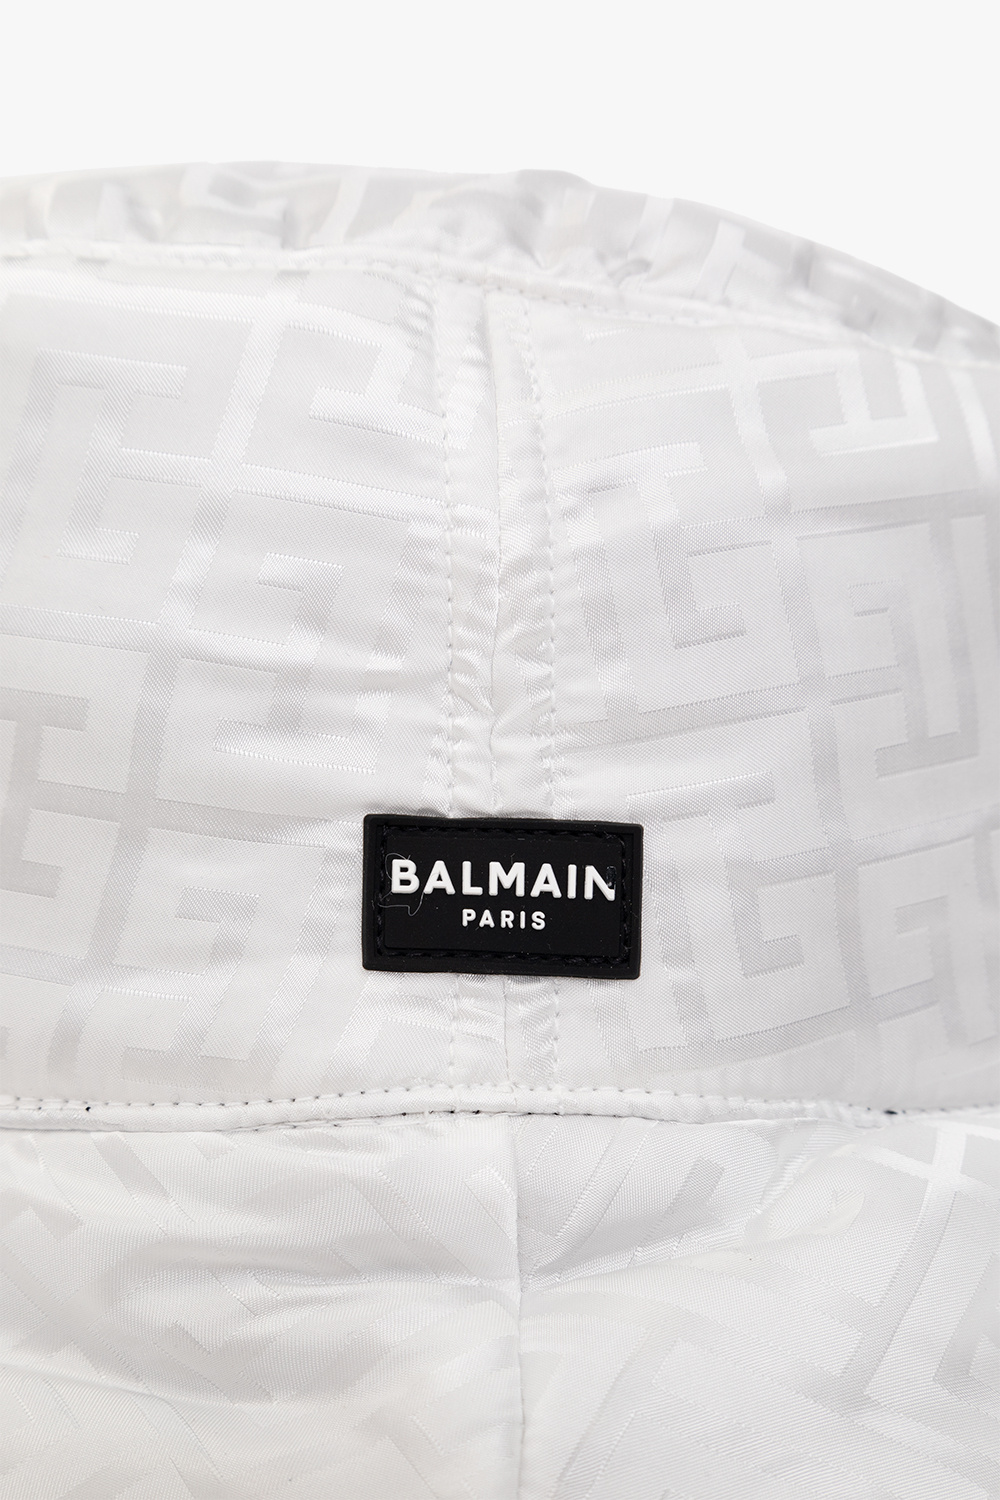 Balmain robes usb caps belts footwear-accessories